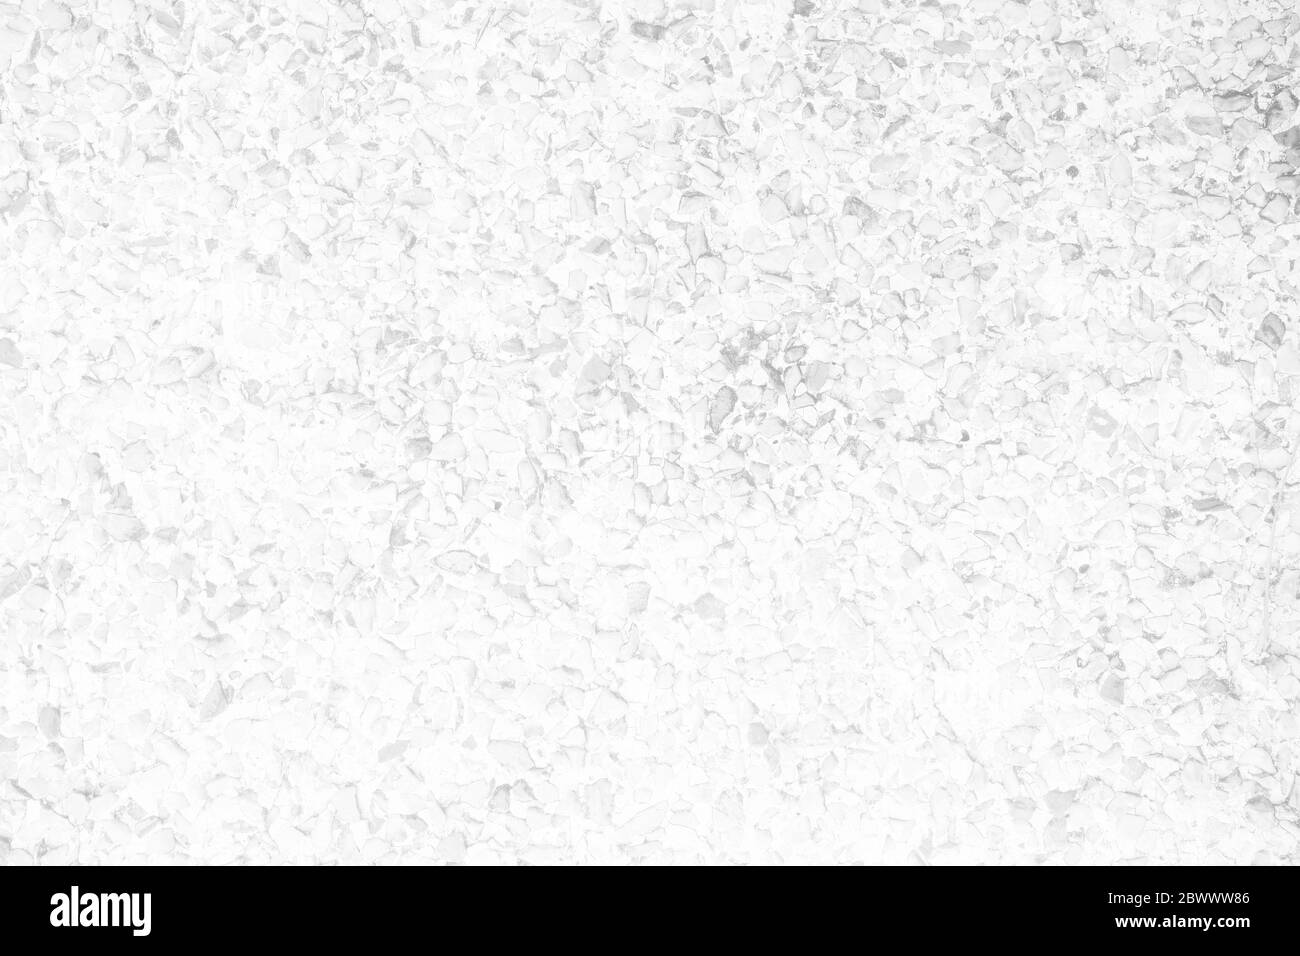 White Grunge Sand Wall Texture Background. Stock Photo